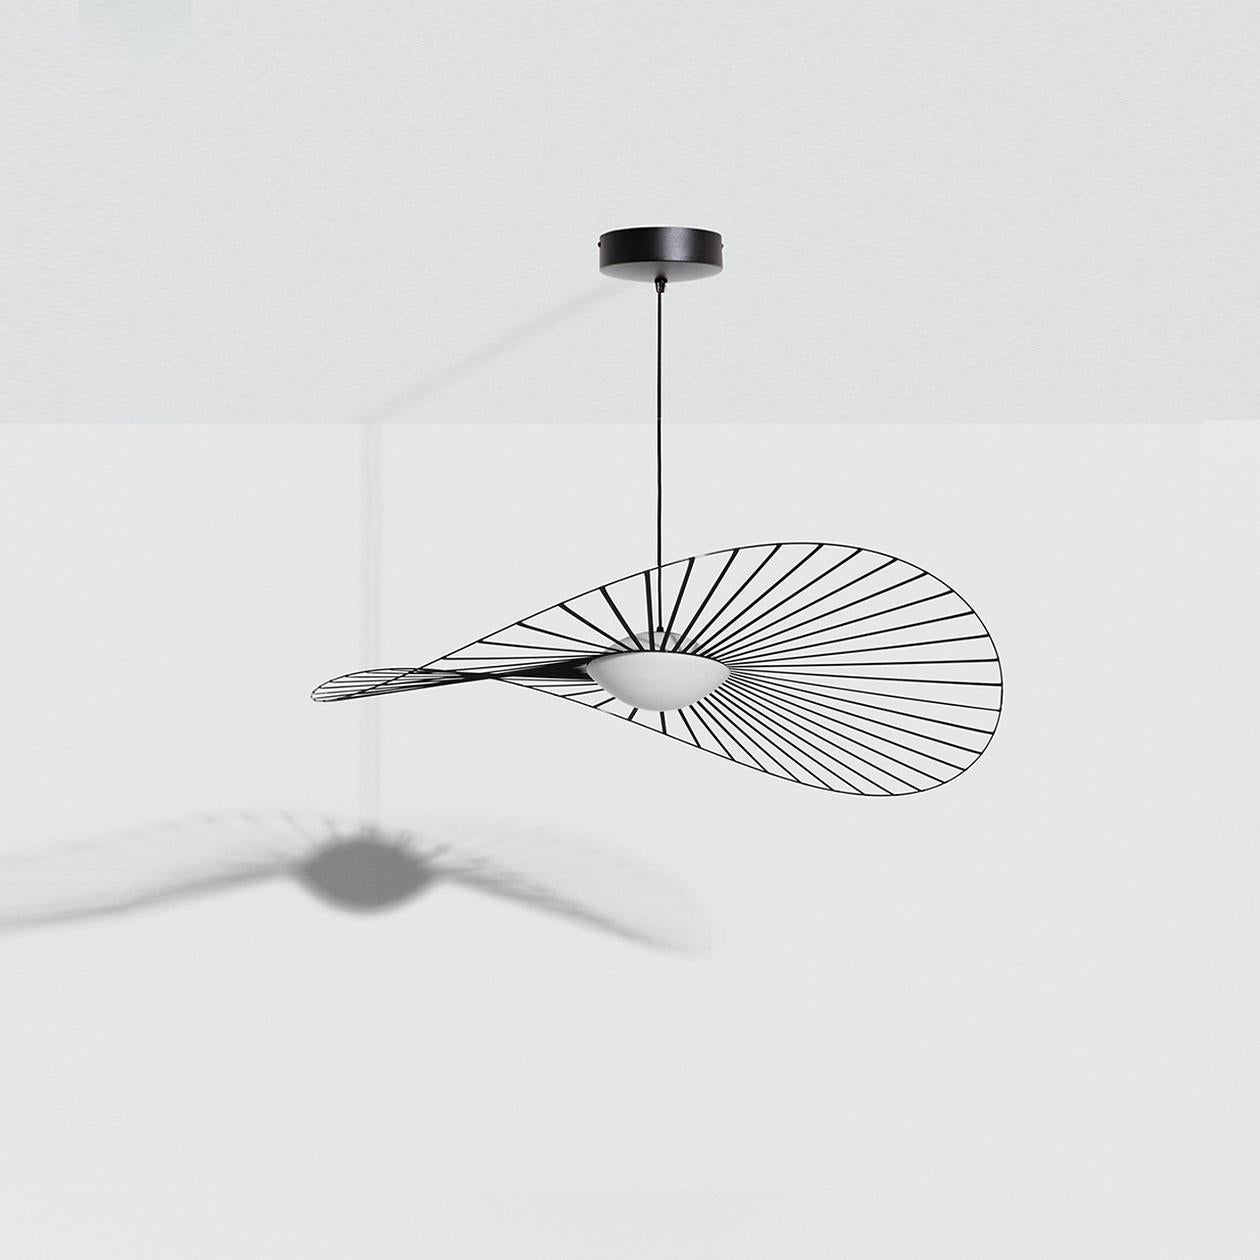 Contemporary Petite Friture Small Vertigo Nova Pendant Light in Black/White, 2020 For Sale